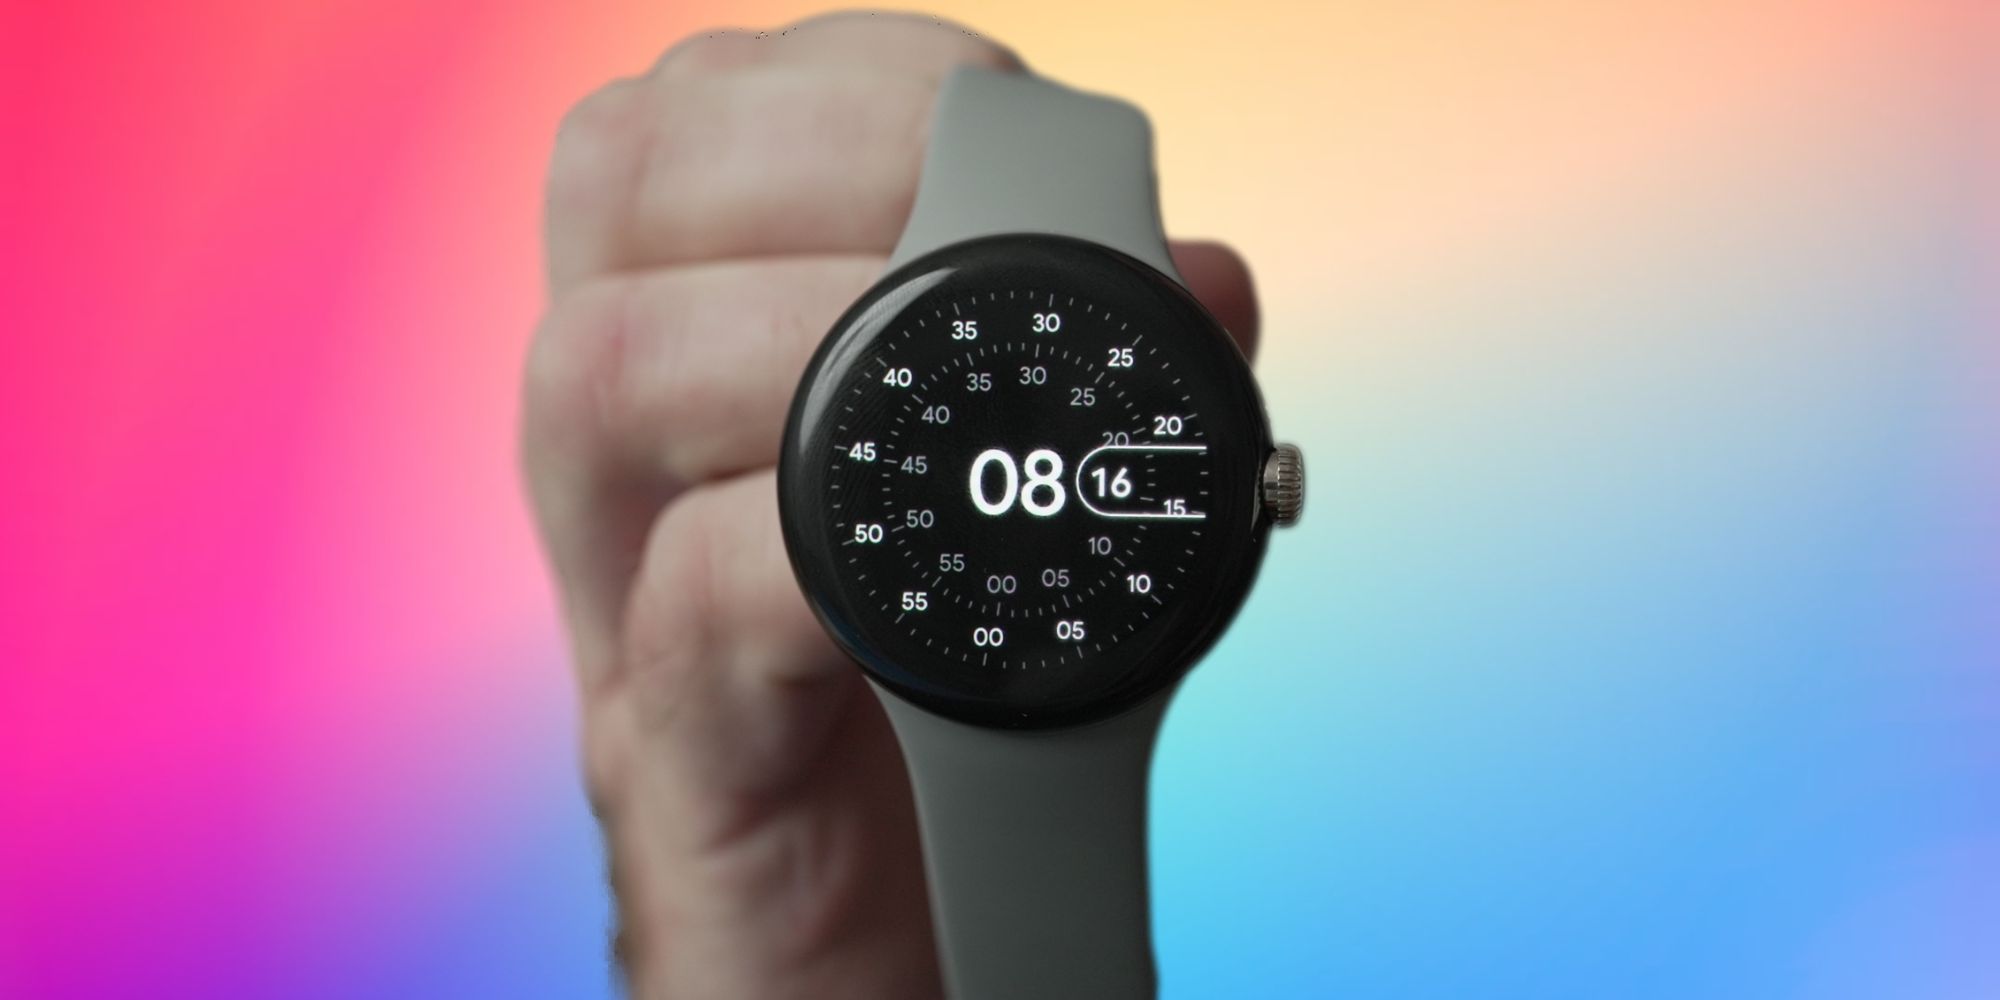 Pixel Watch – What was Google thinking?